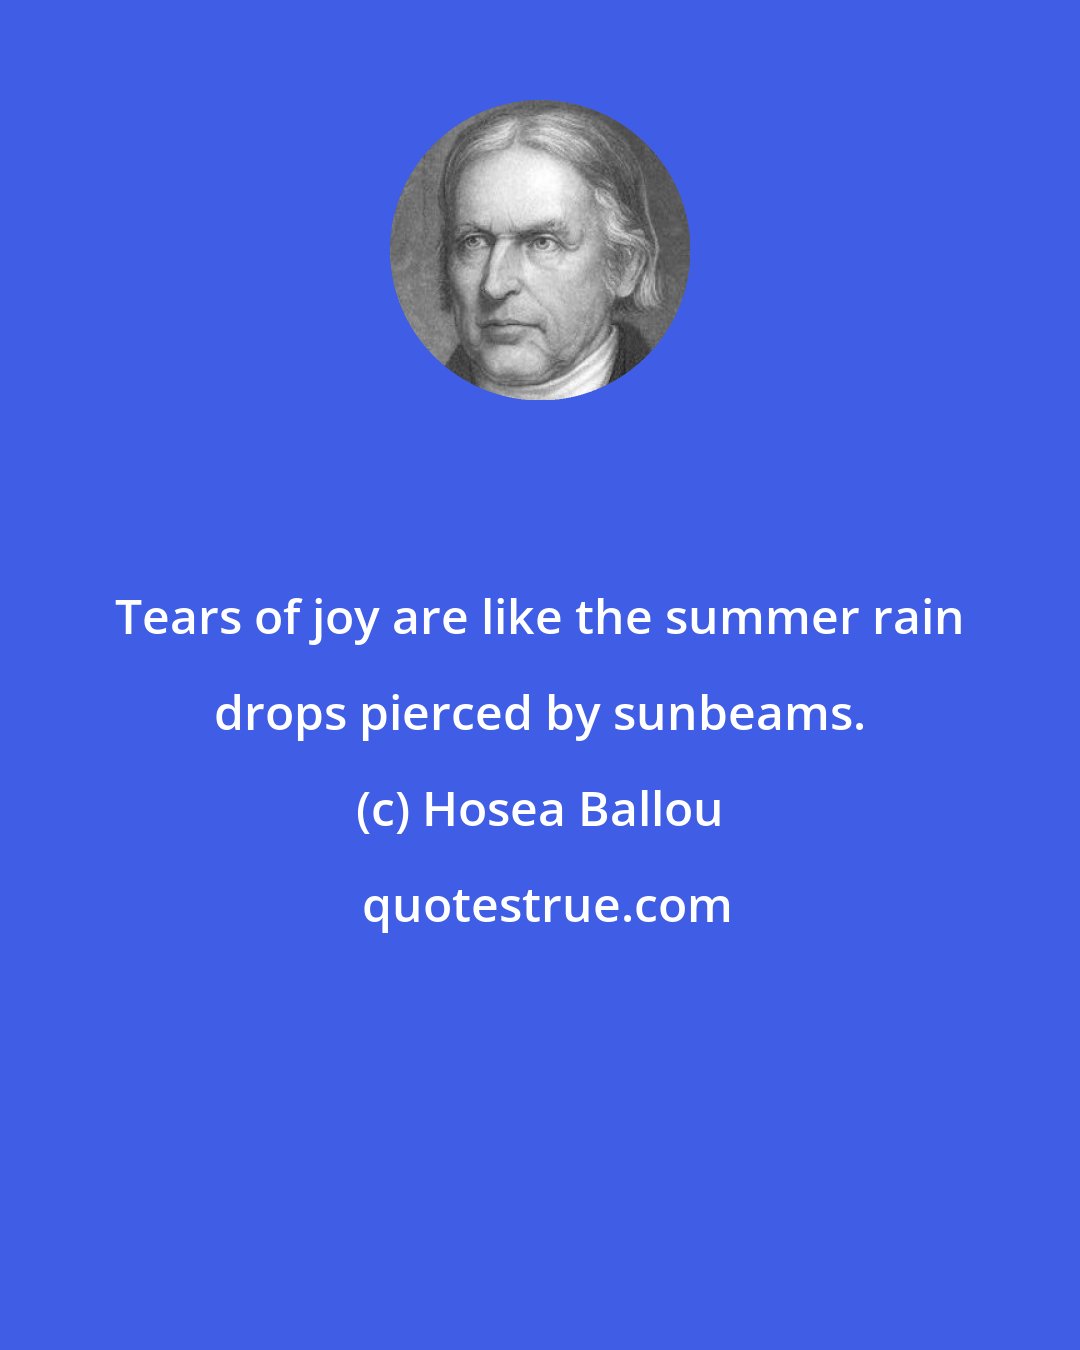 Hosea Ballou: Tears of joy are like the summer rain drops pierced by sunbeams.